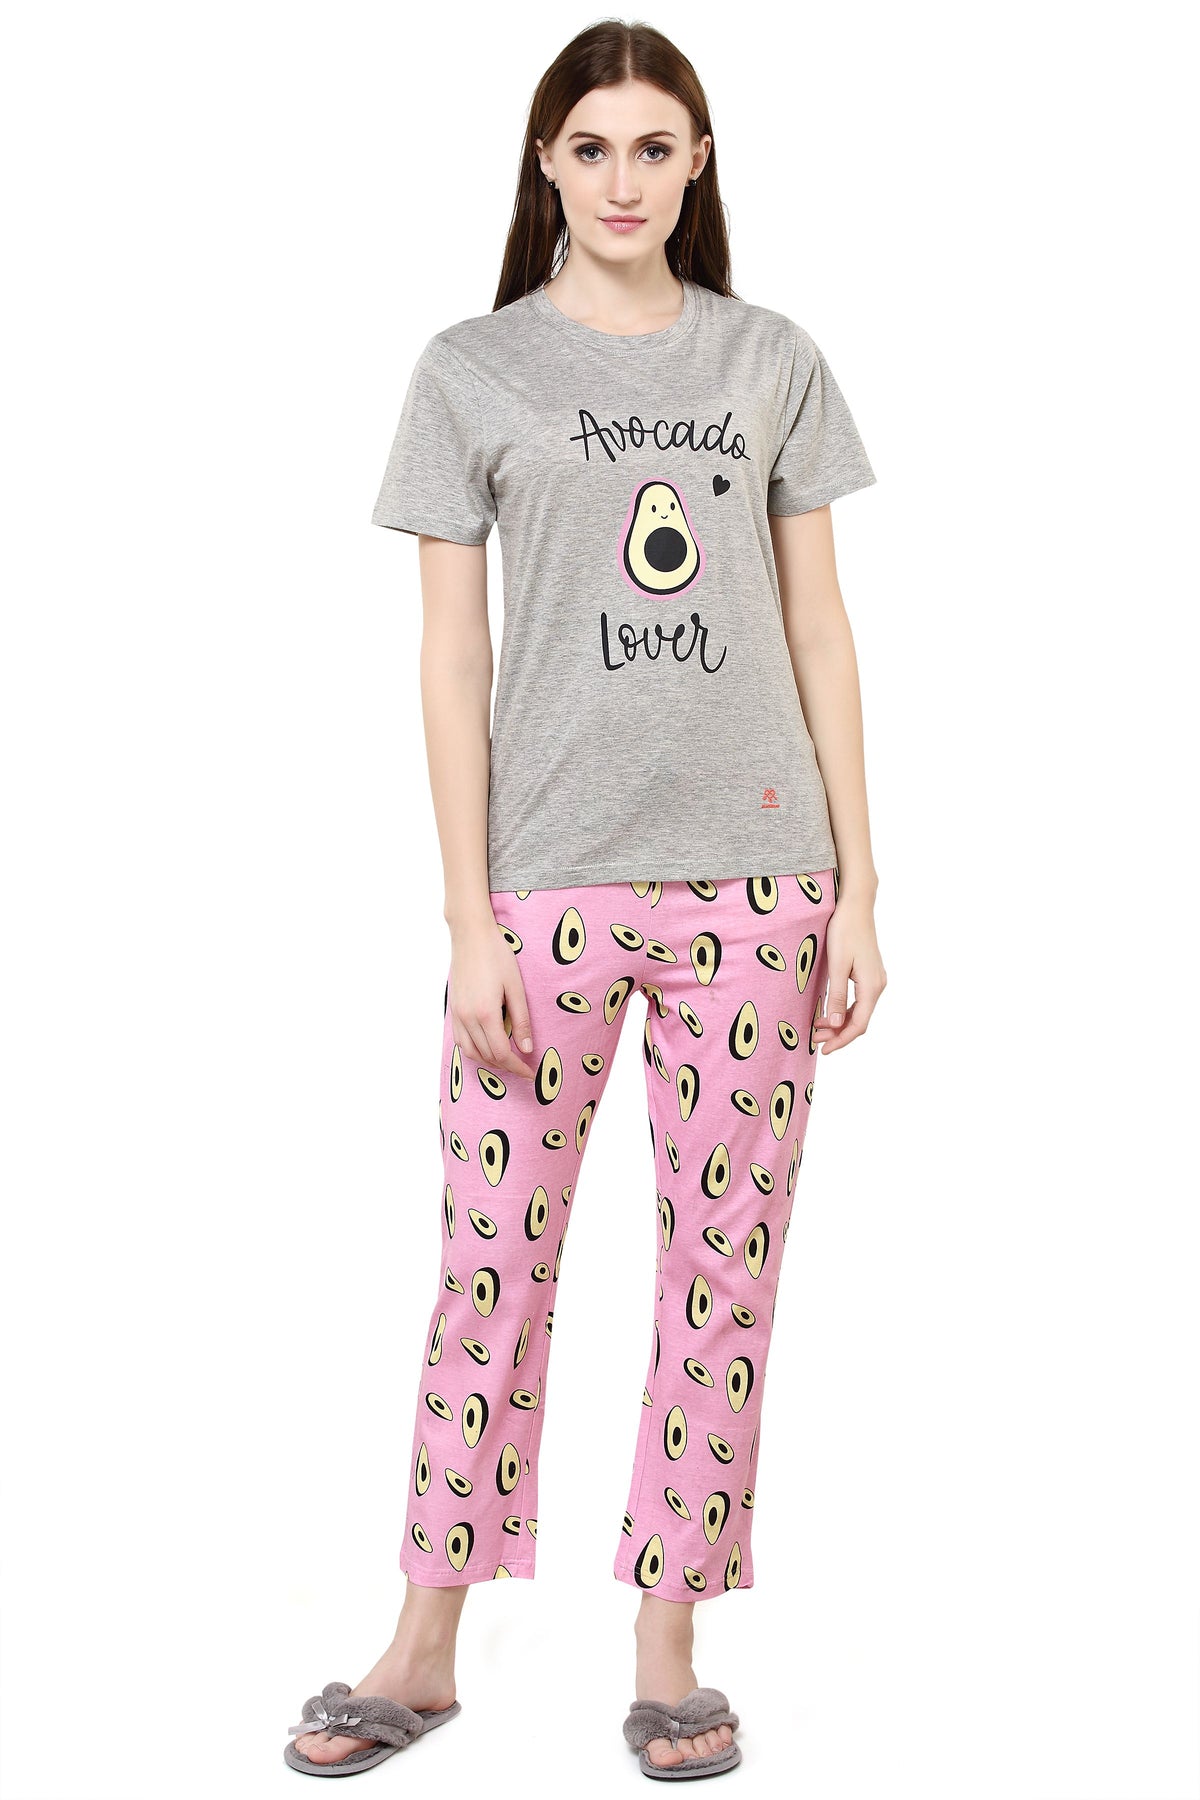 evolove Women's Paris Pink Round Neck Avocado Printed Pajama Set Night Suit ( Grey & Paris Pink, S) Get free eyemask inside of any design